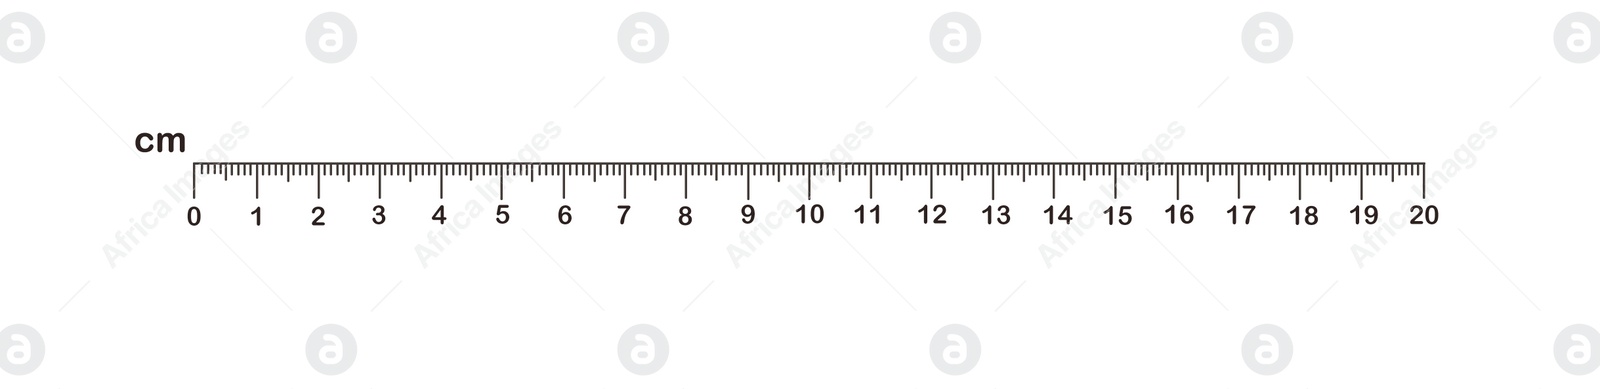 Image of Measuring length markings in centimeters of ruler on white background. Illustration